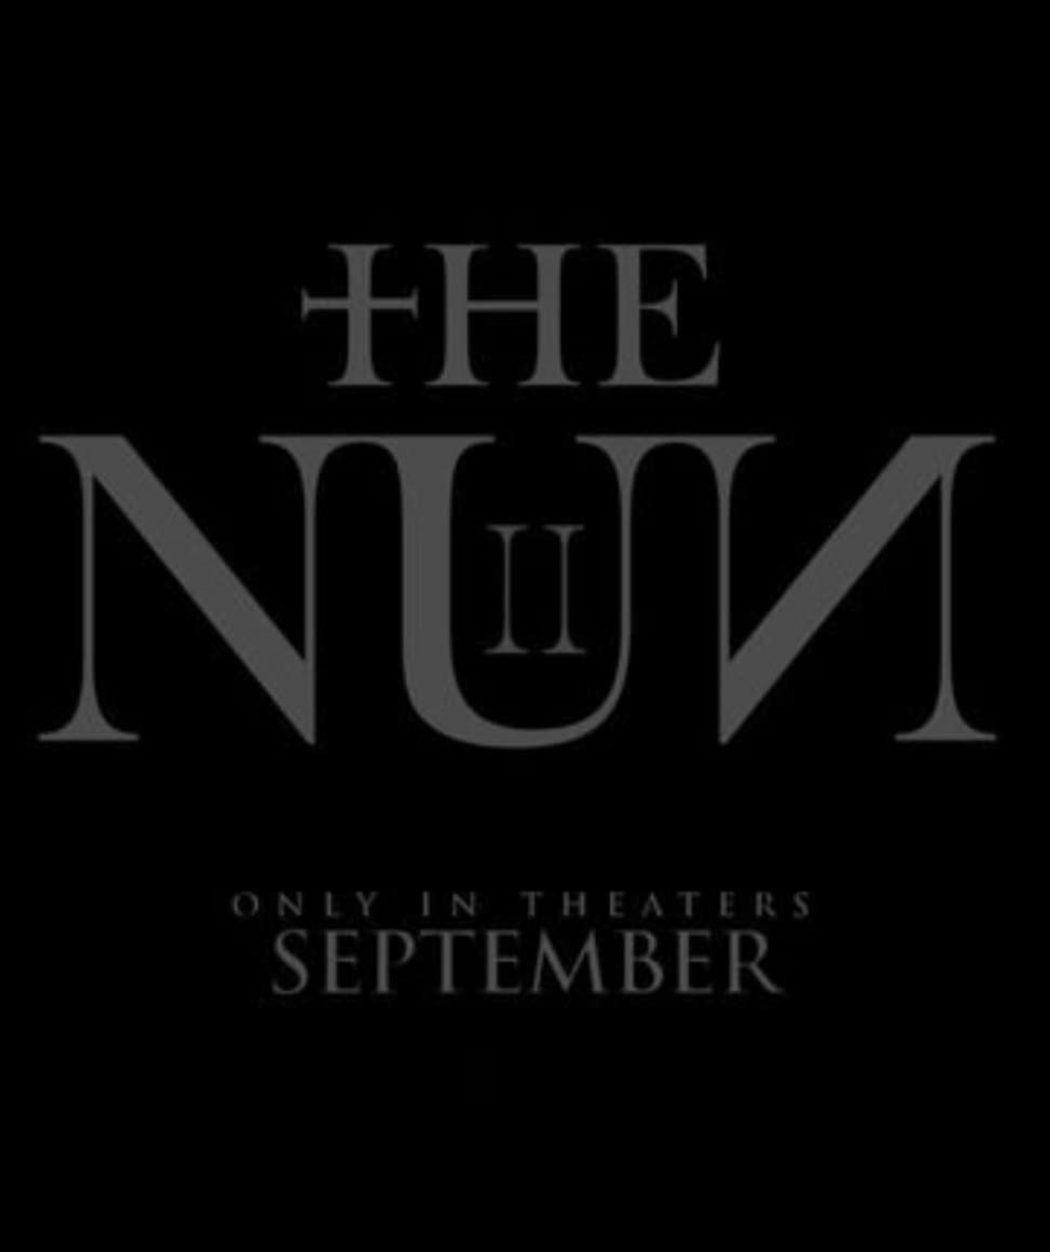 The Nun 2 